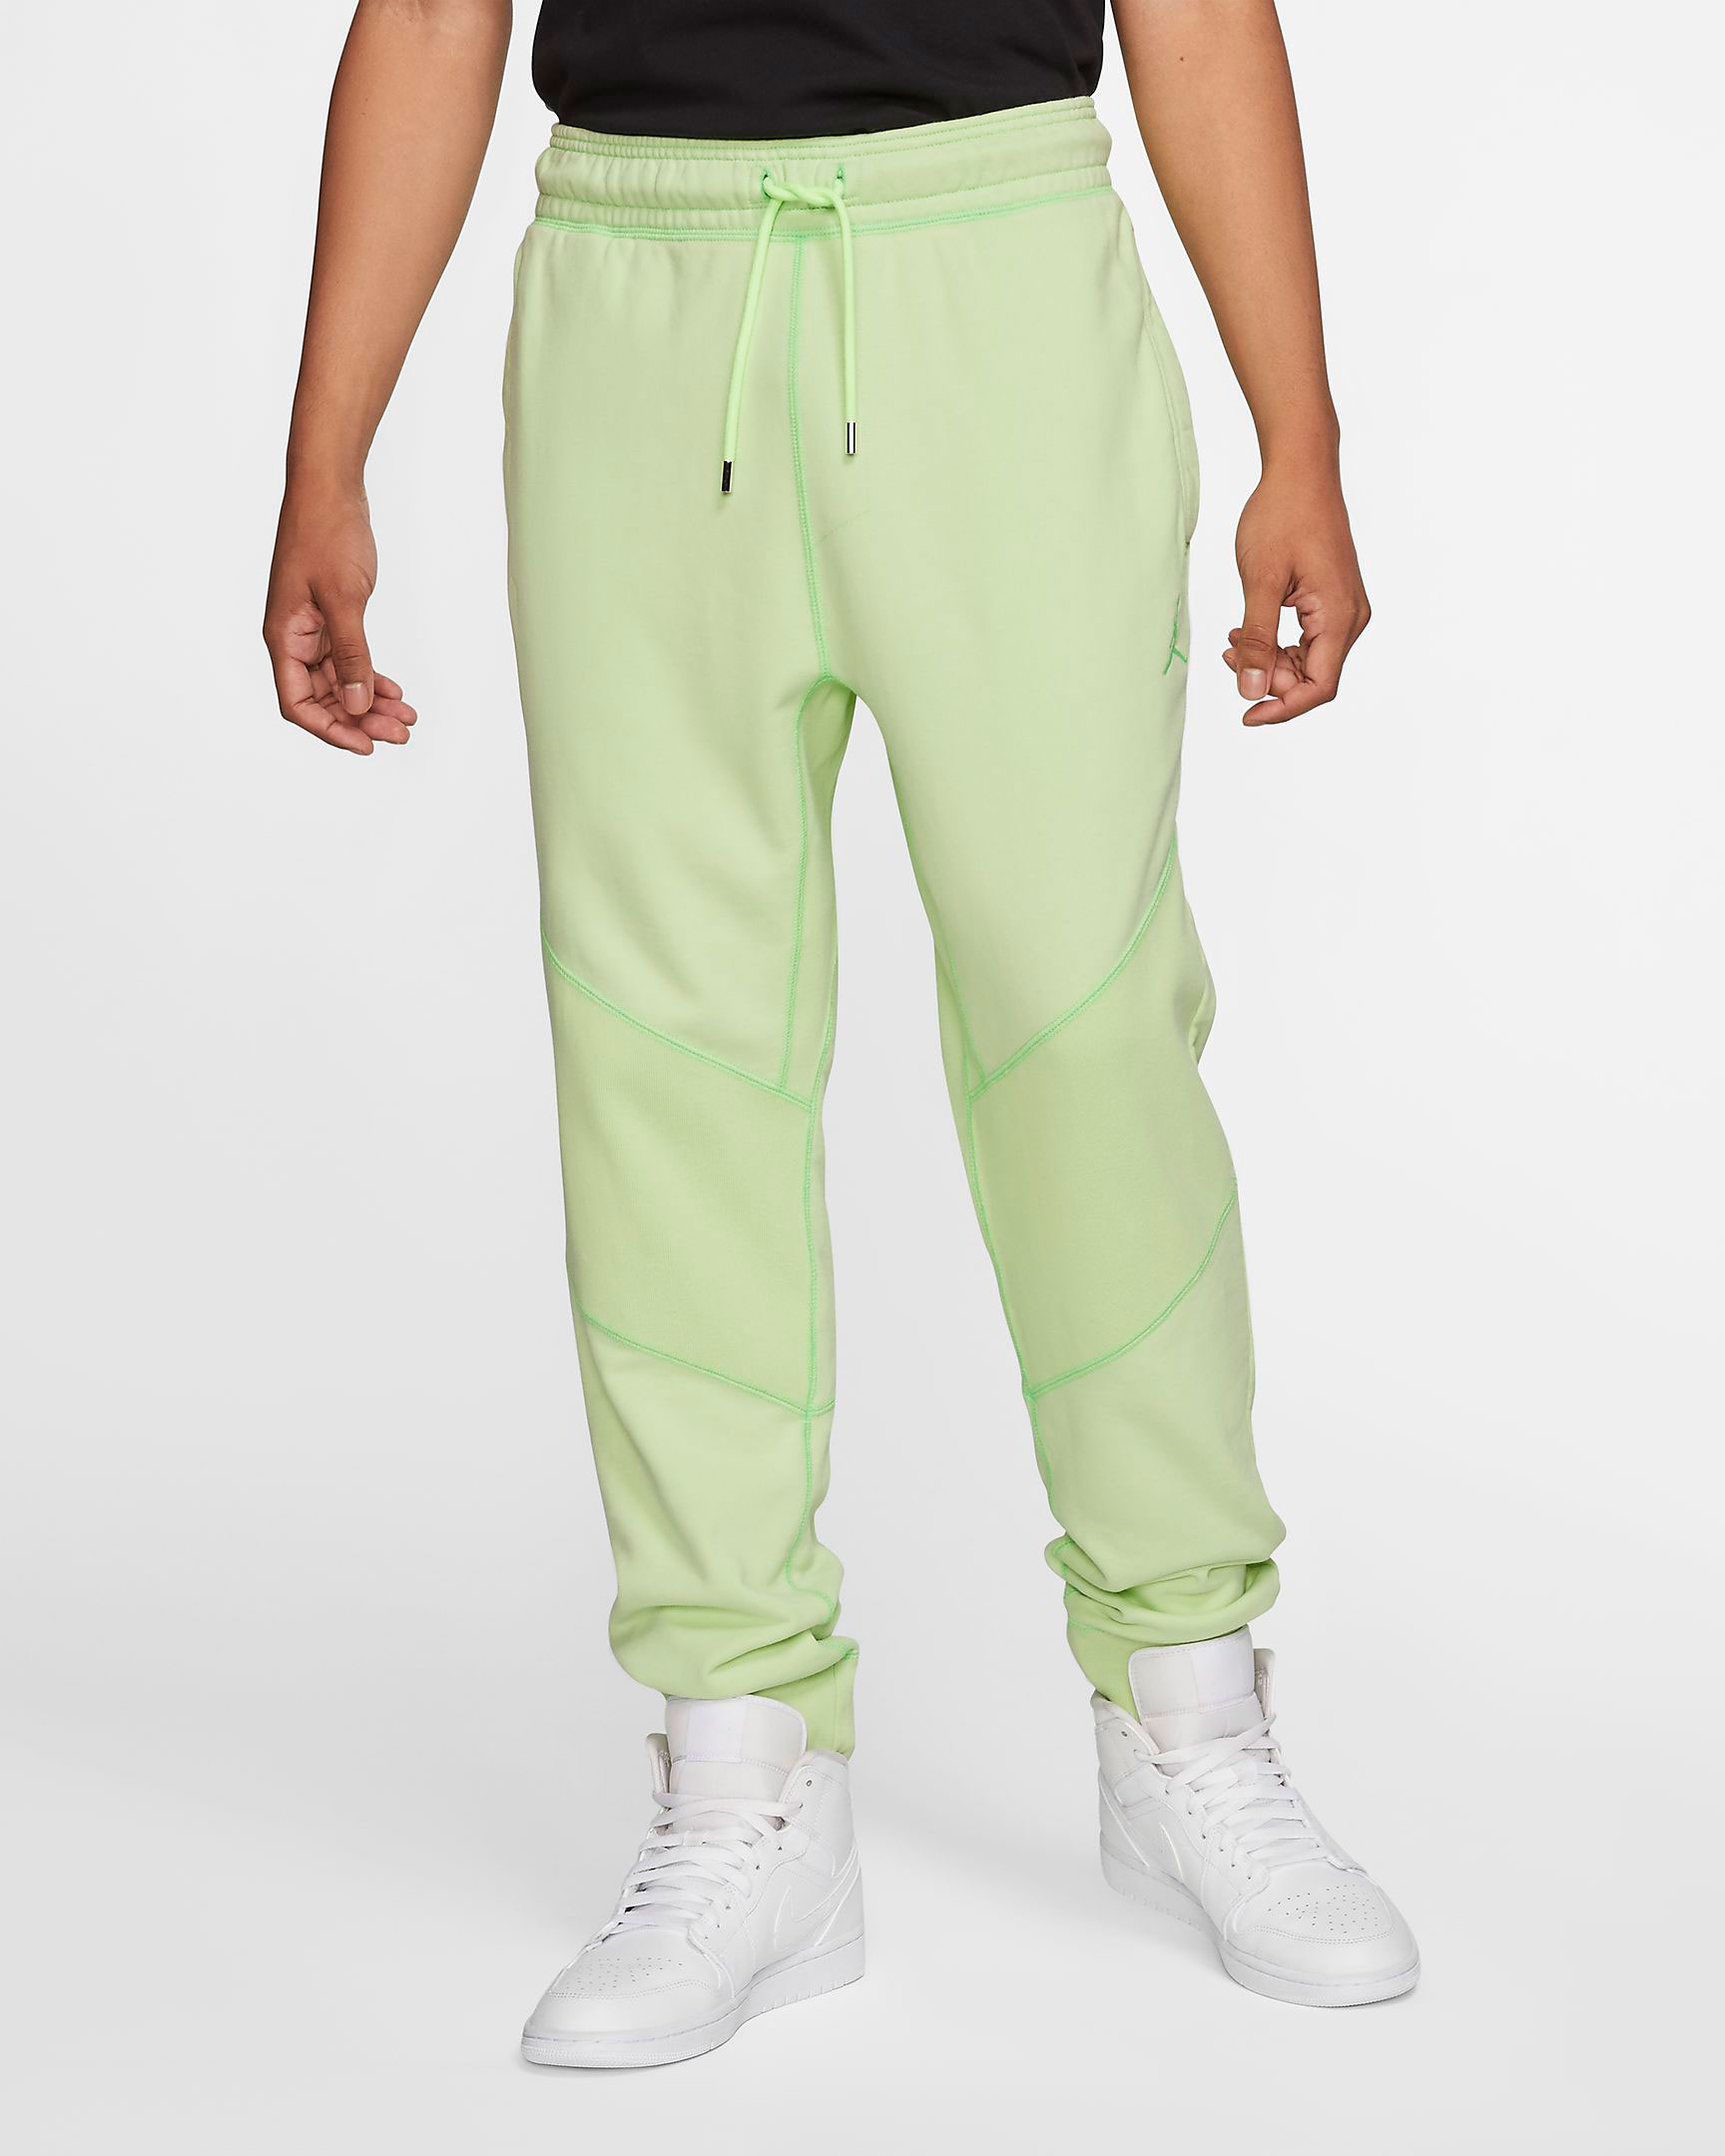 jordan-5-ghost-green-alternate-bel-air-jogger-pants-match